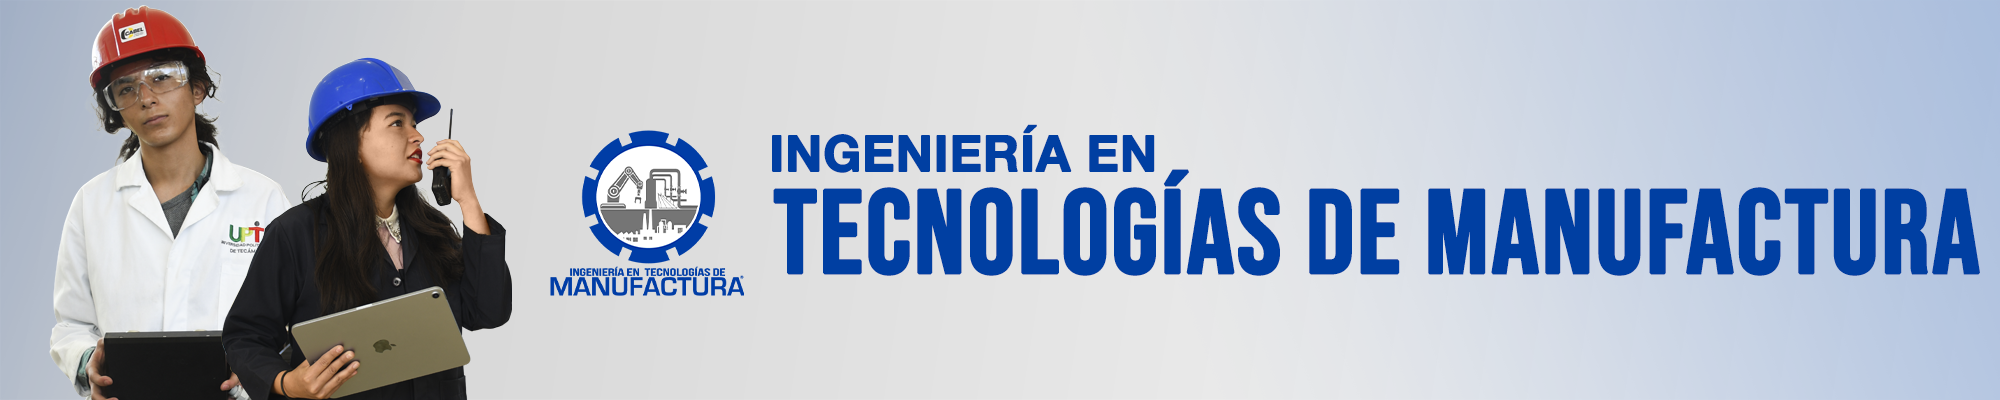 ingenieria_en_tecnologias_de_manufactura